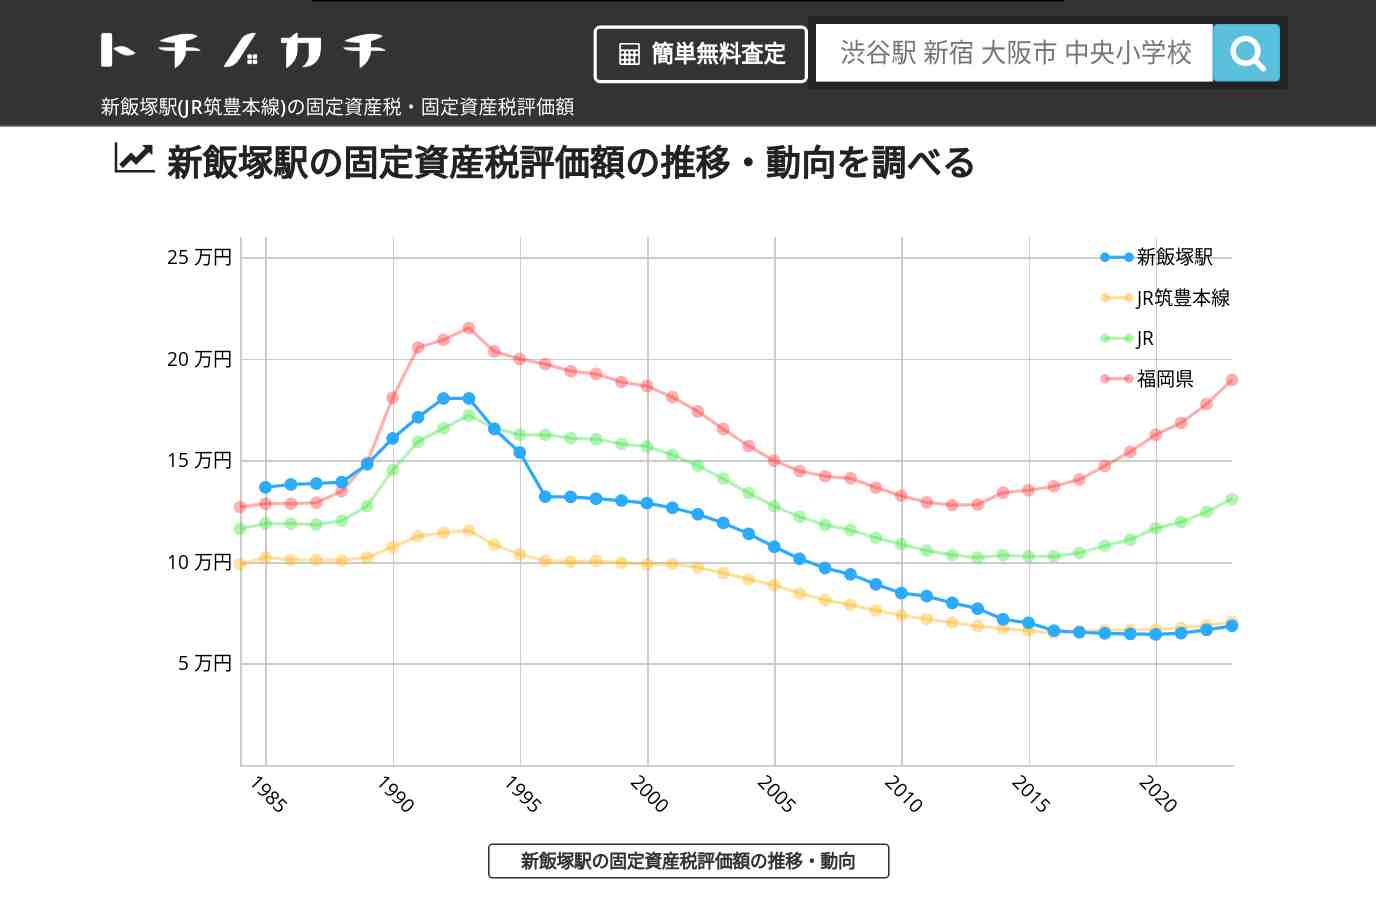 新飯塚駅(JR筑豊本線)の固定資産税・固定資産税評価額 | トチノカチ